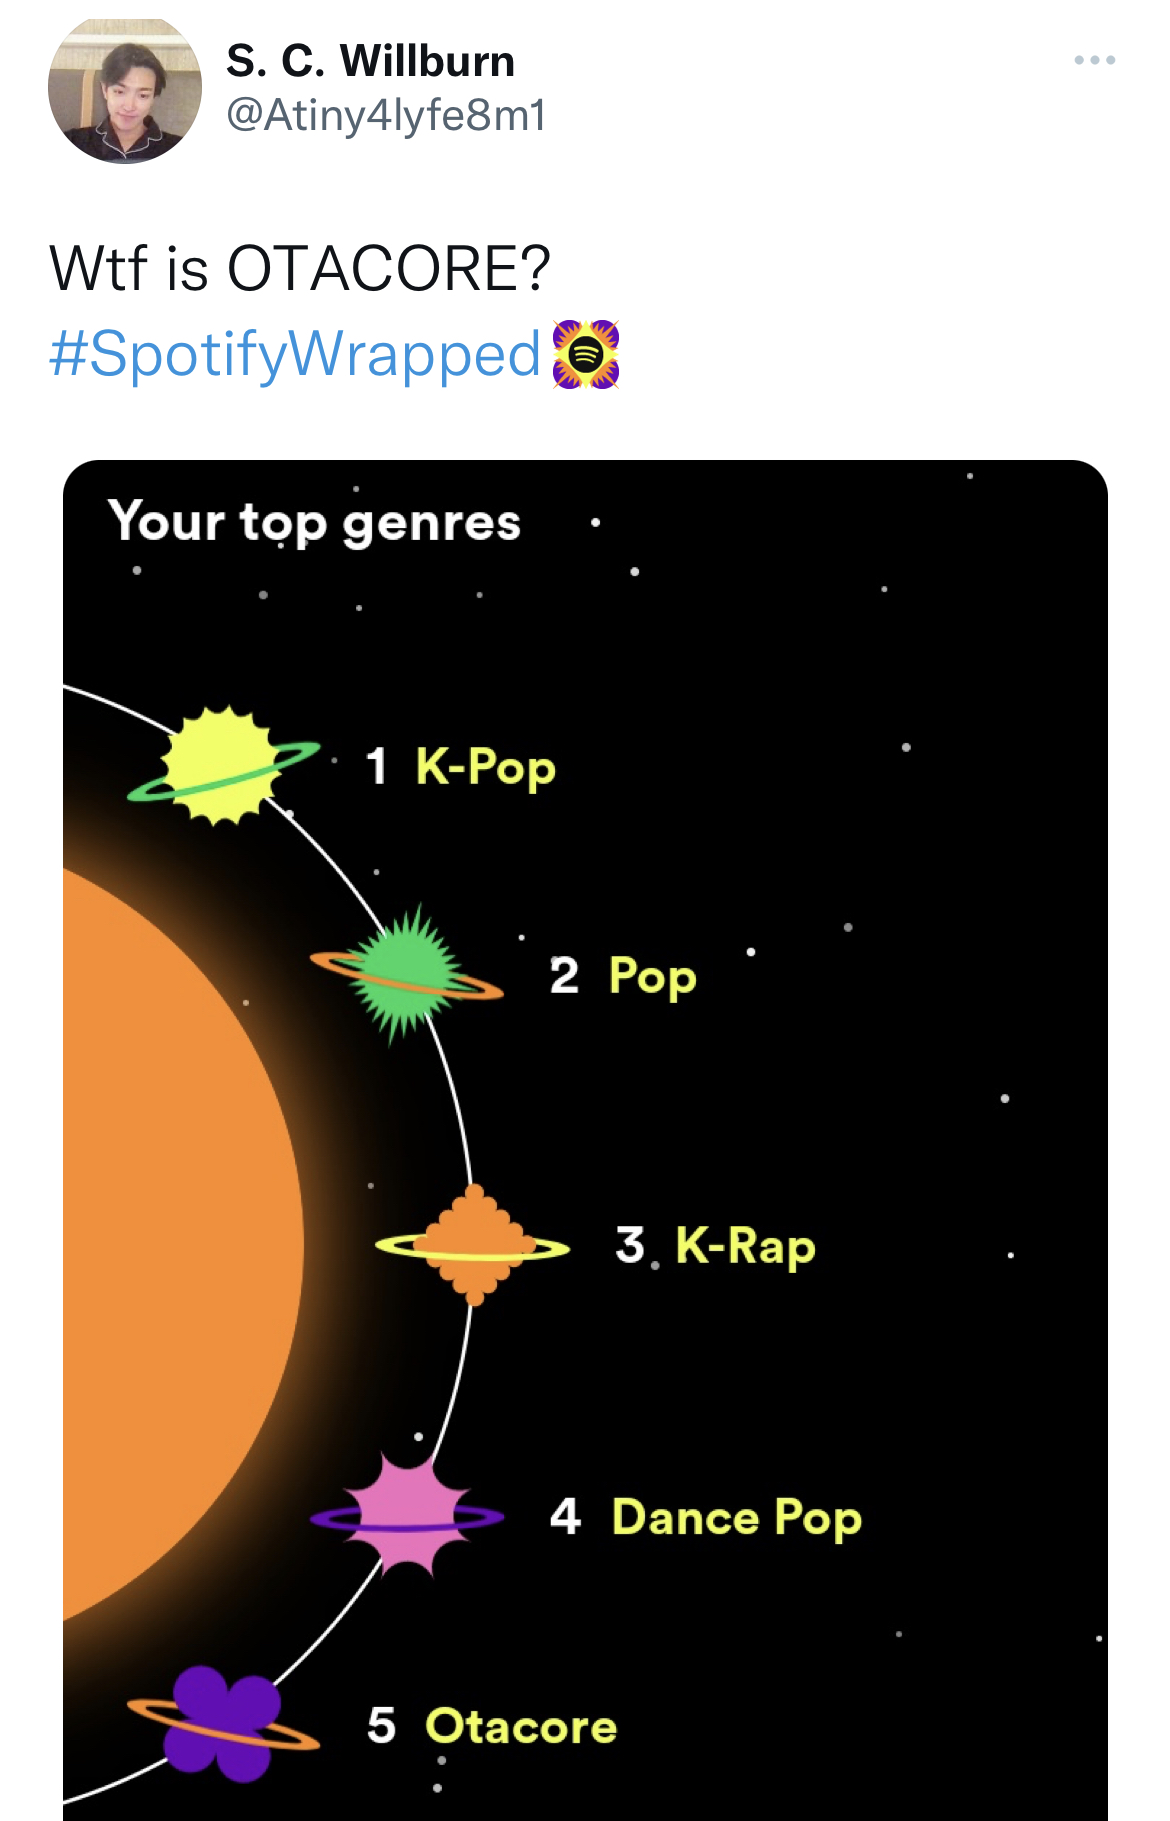 Spotify Wrapped Memes - star - S. C. Willburn Wtf is Otacore? Your top genres 1 KPop 2 Pop 3. KRap 4 Dance Pop 5 Otacore